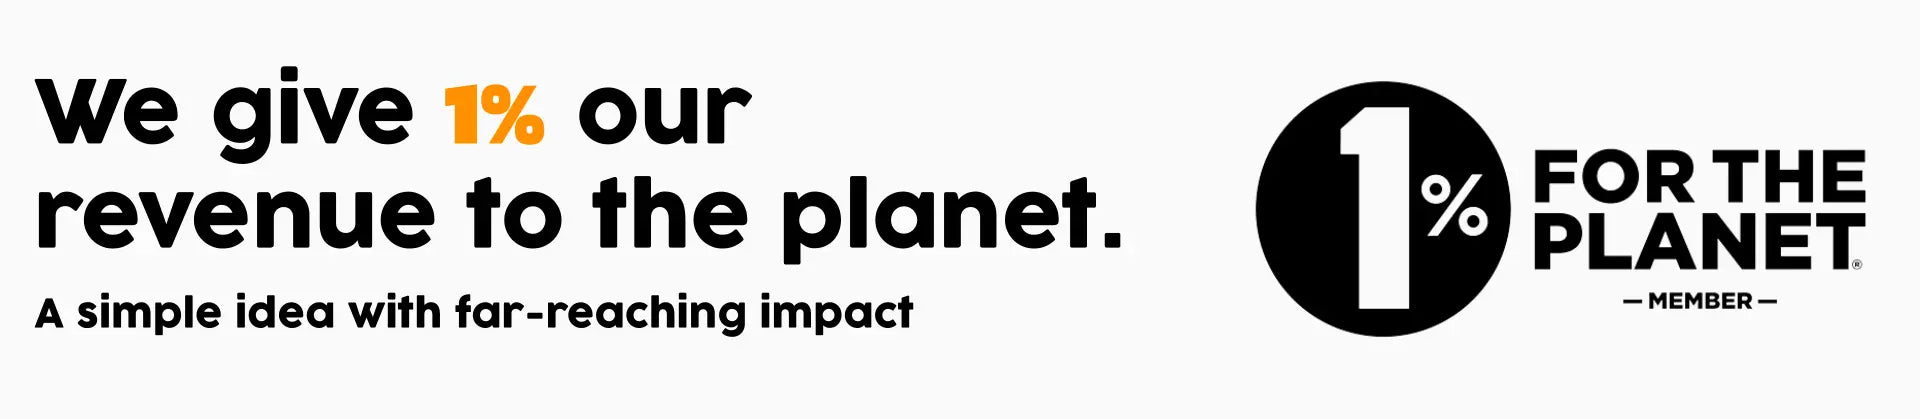 1% for planet logo